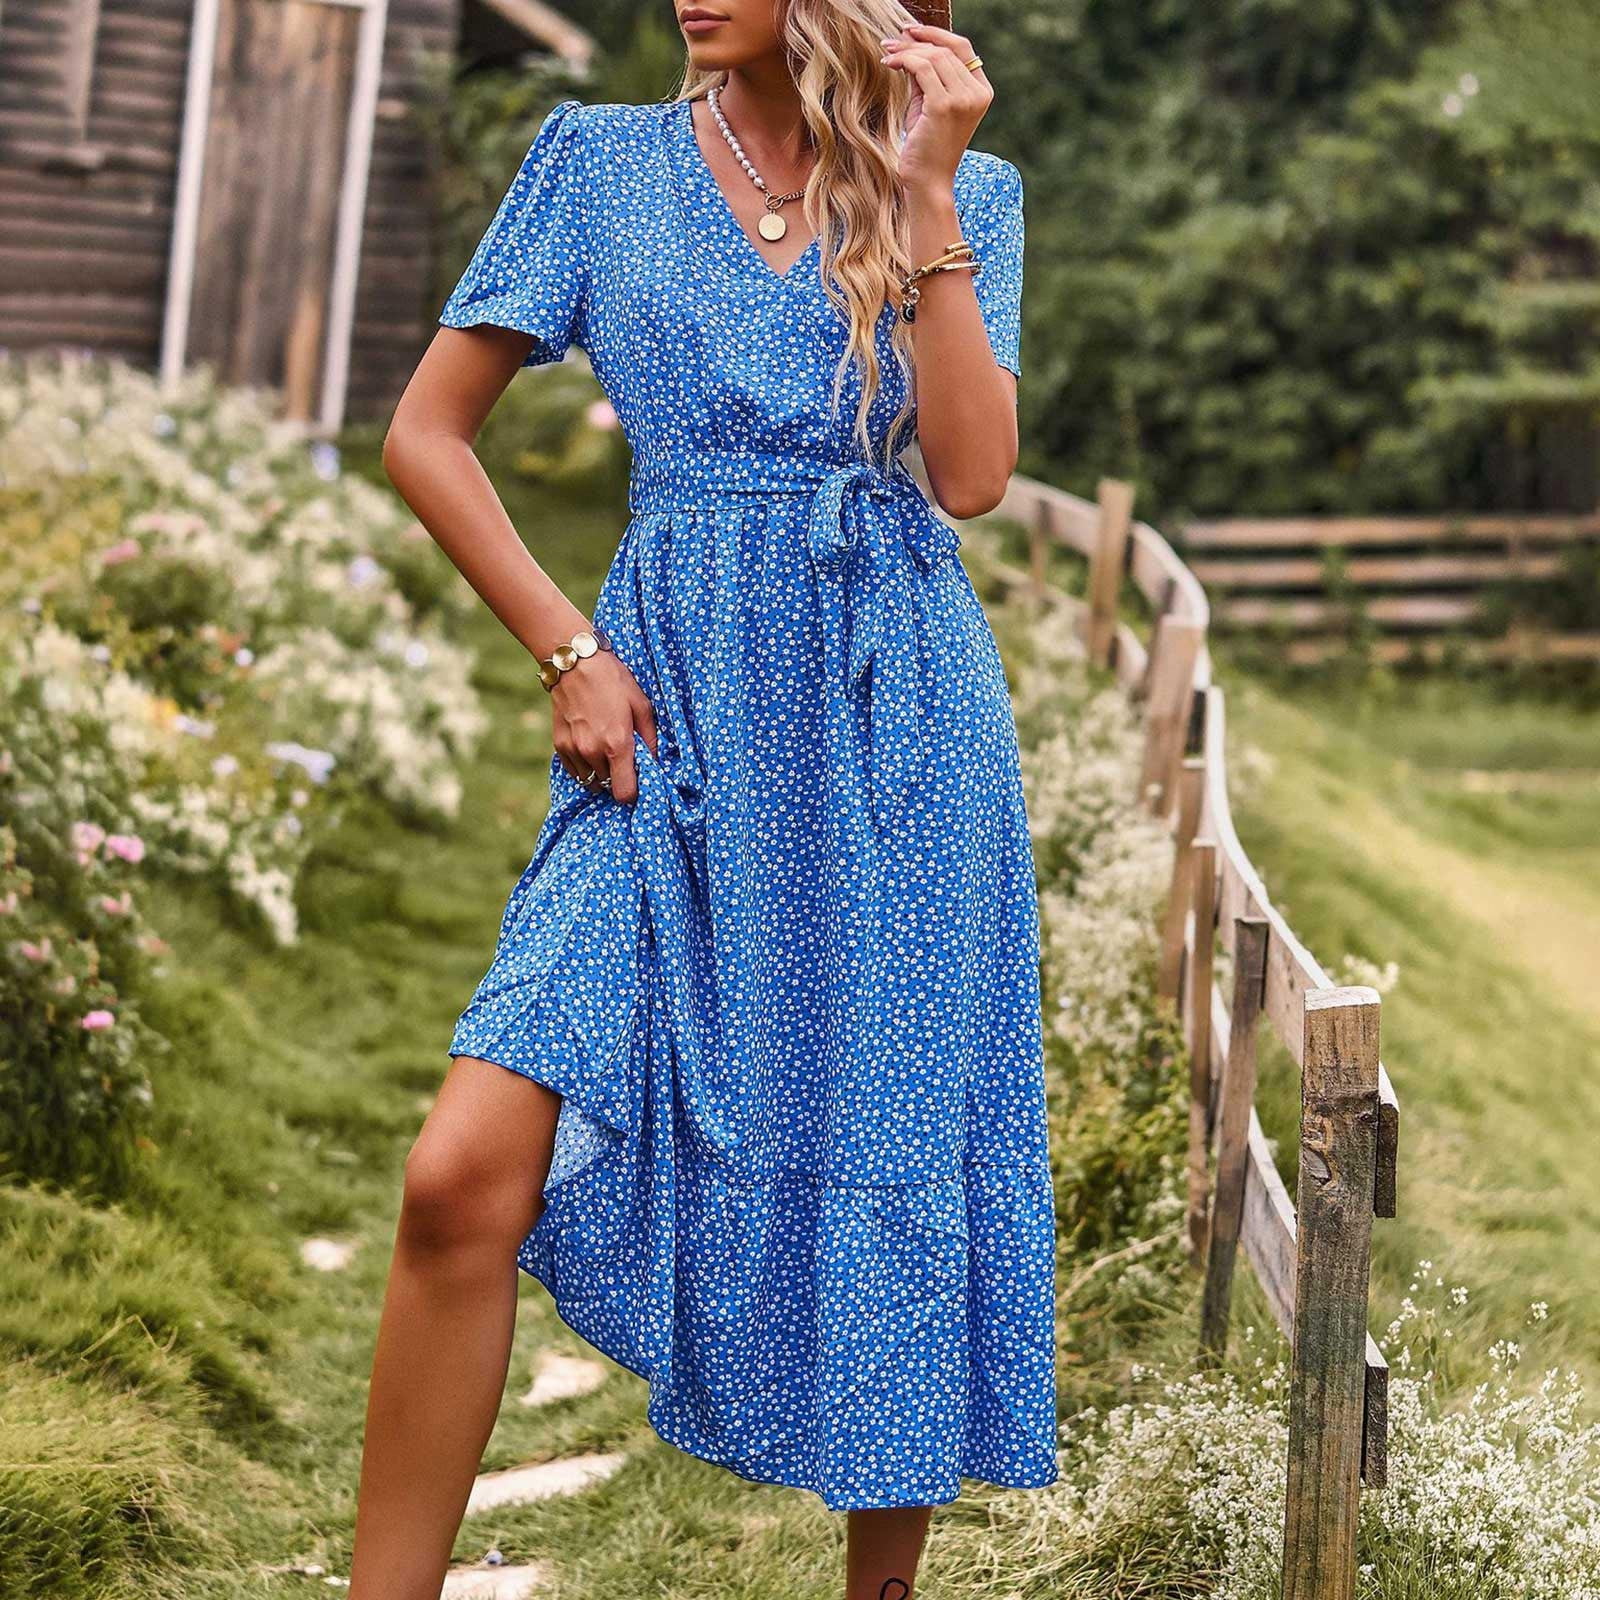 Olyvenn Deals Classic Mini Dresses for Women Fashion Ladies Summer Dress  Short Sleeve Plain Paisley Print Crew Neck Loose Fit Casual Trendy Girls  Above Knee Female Leisure Navy 4 